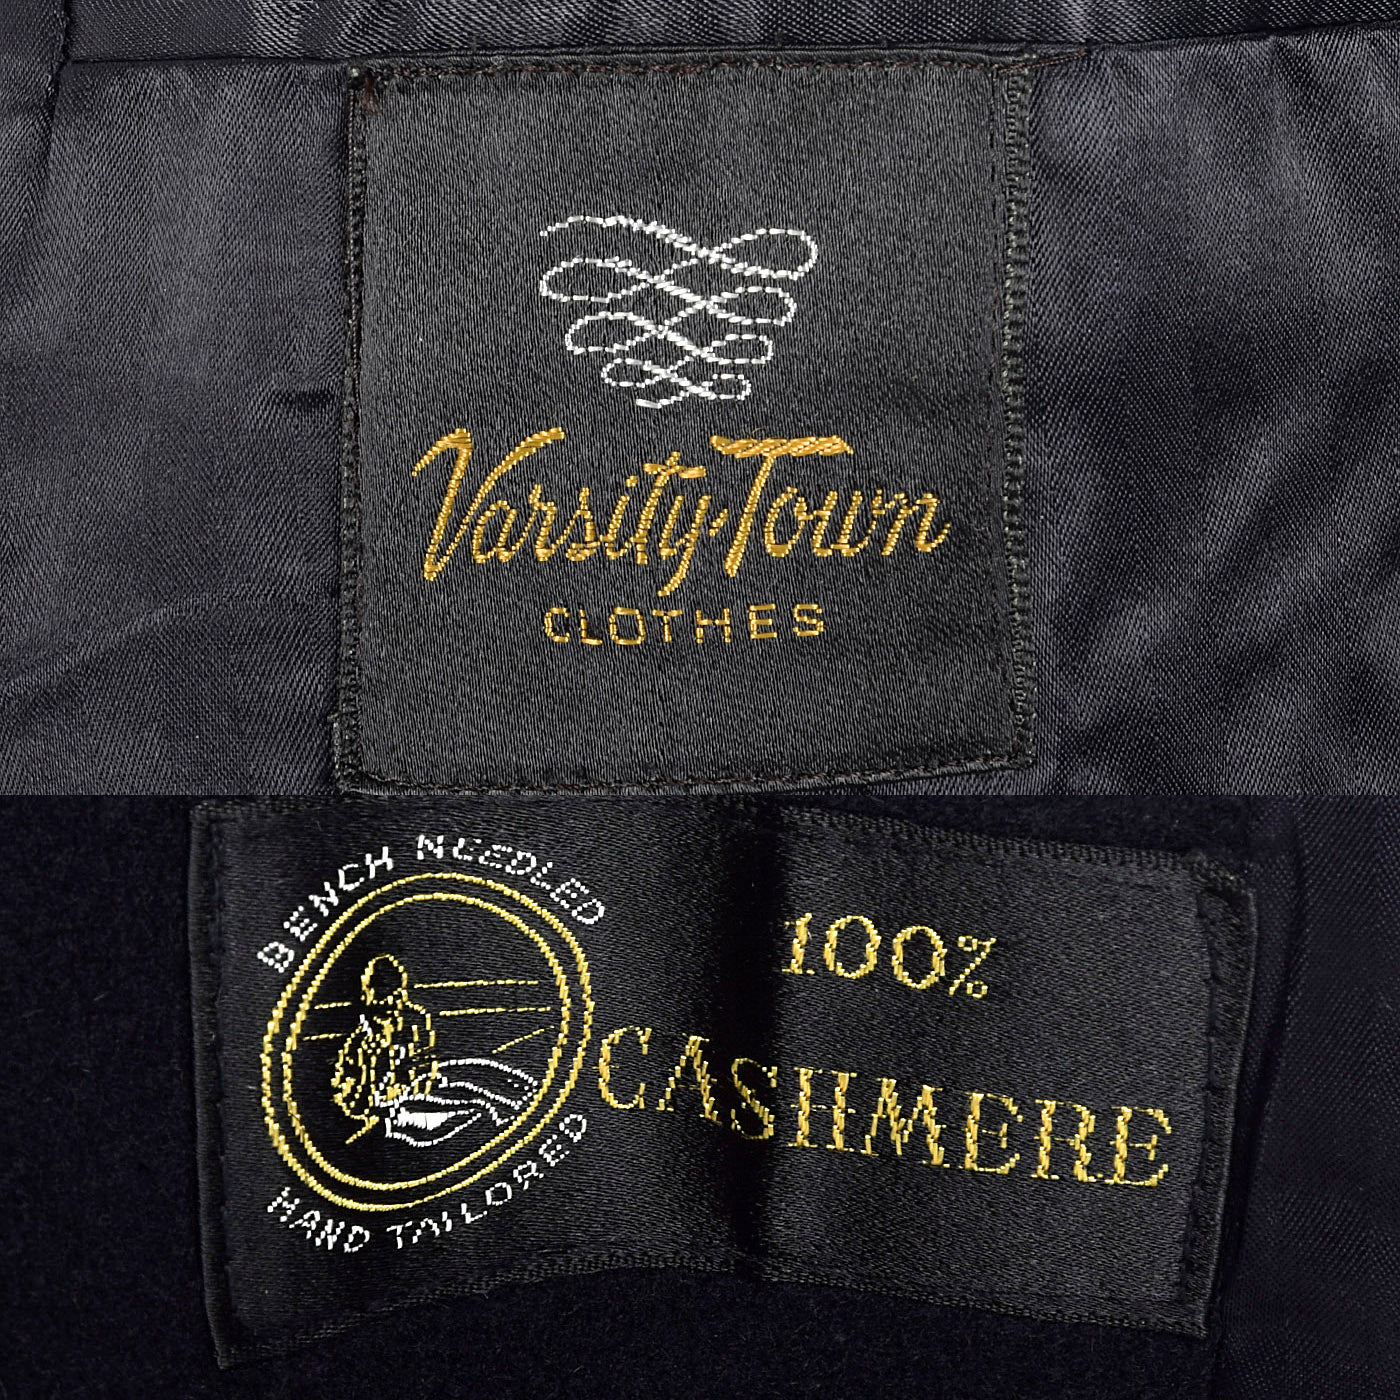 1960s Black Cashmere Jacket